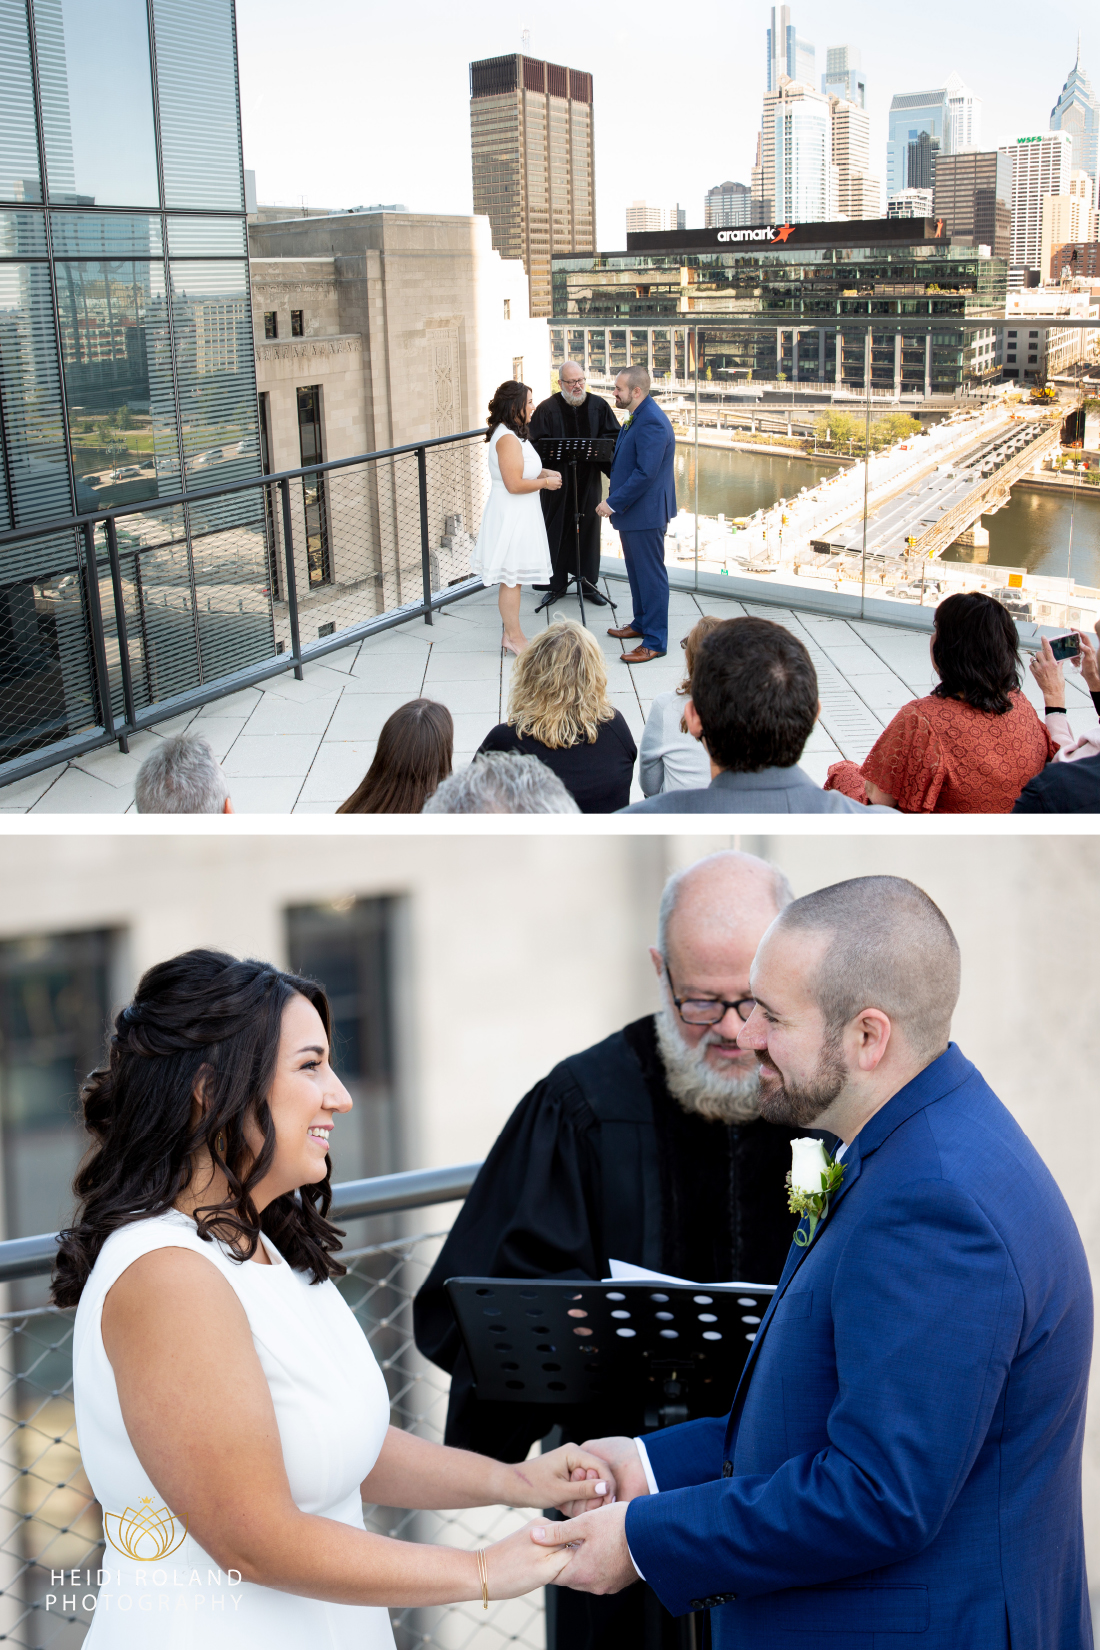 Cira Green Wedding vows on rooftop in Philadelphia